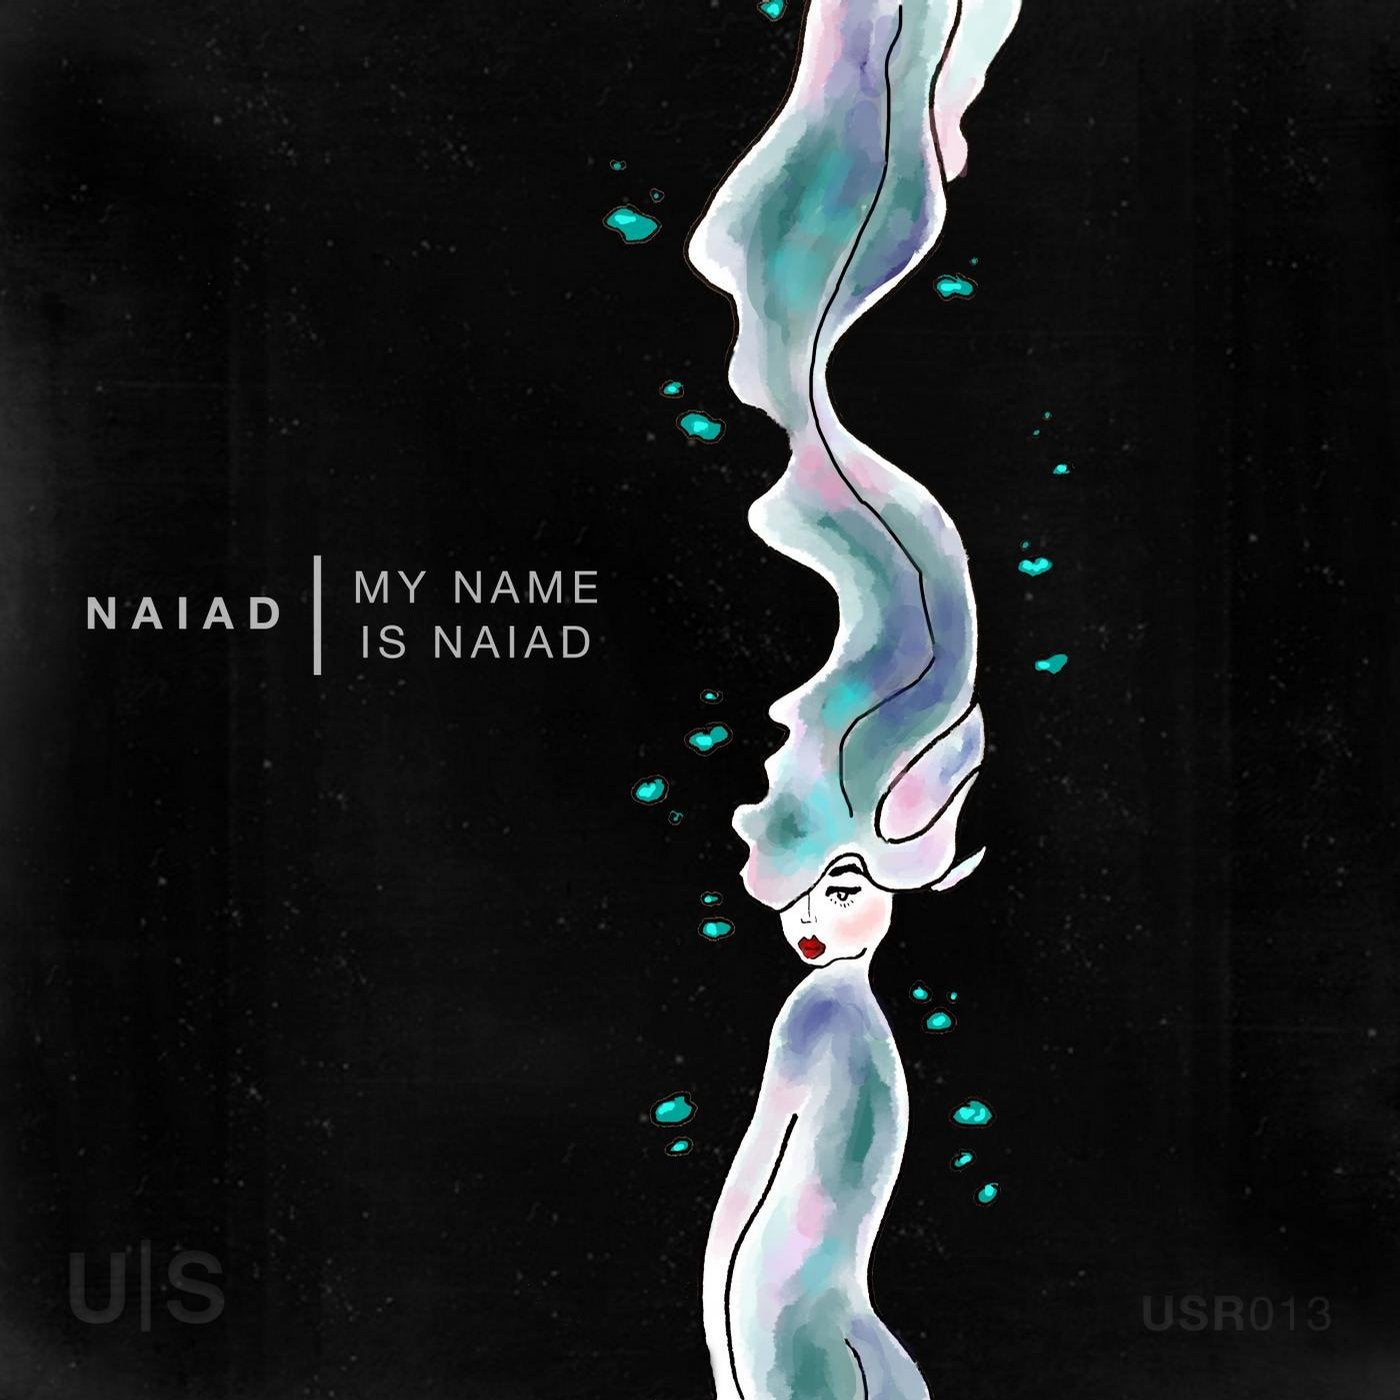 My Name is NAIAD